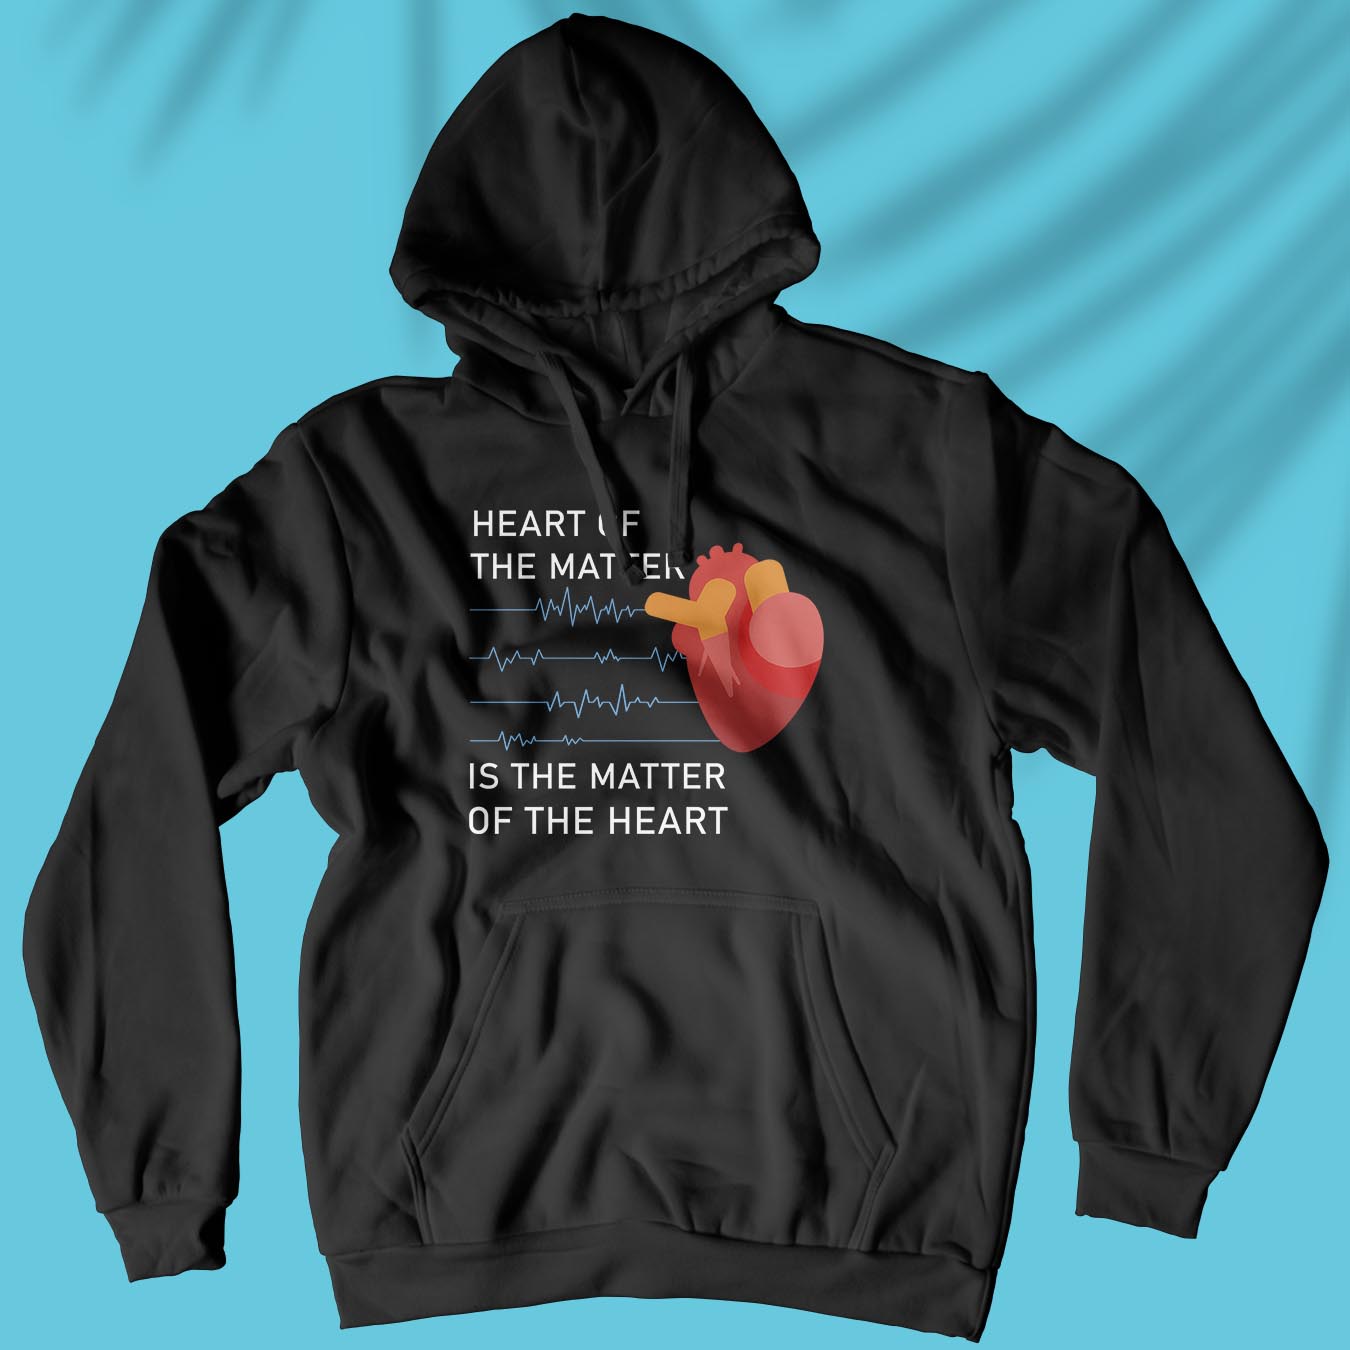 Heart of the matter - Unisex Hoodie